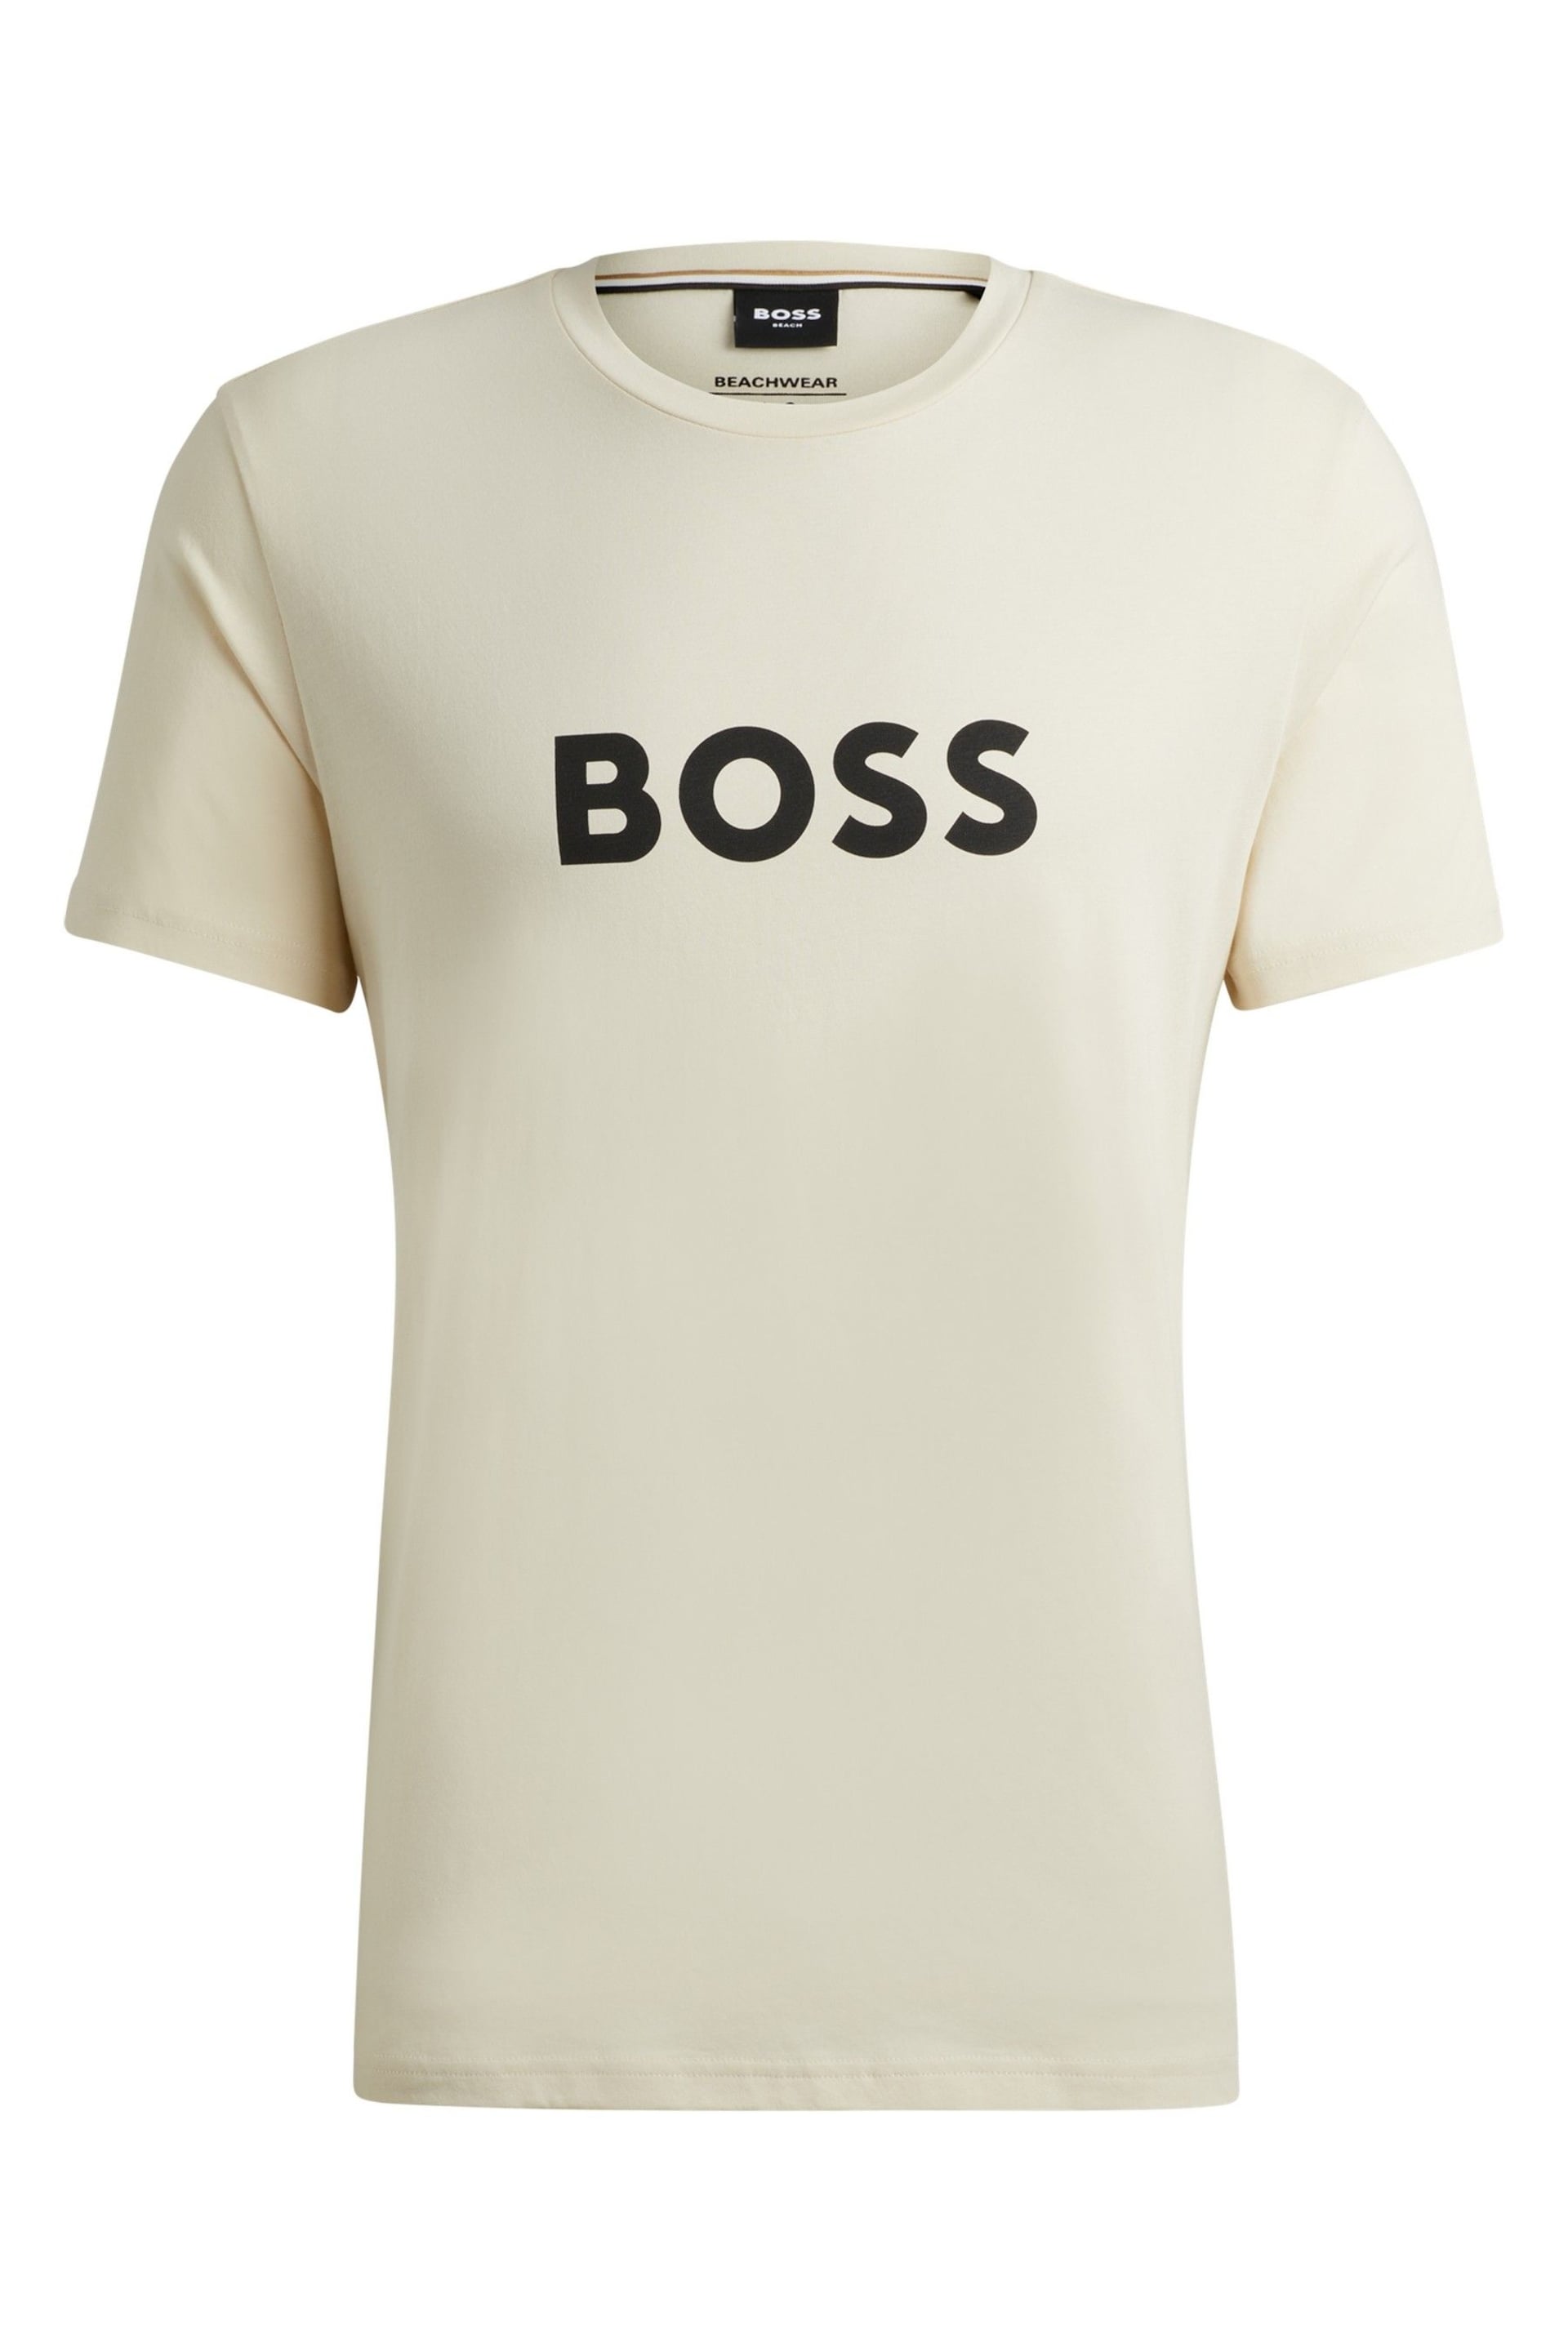 BOSS Beige Large Chest Logo T-Shirt - Image 3 of 3